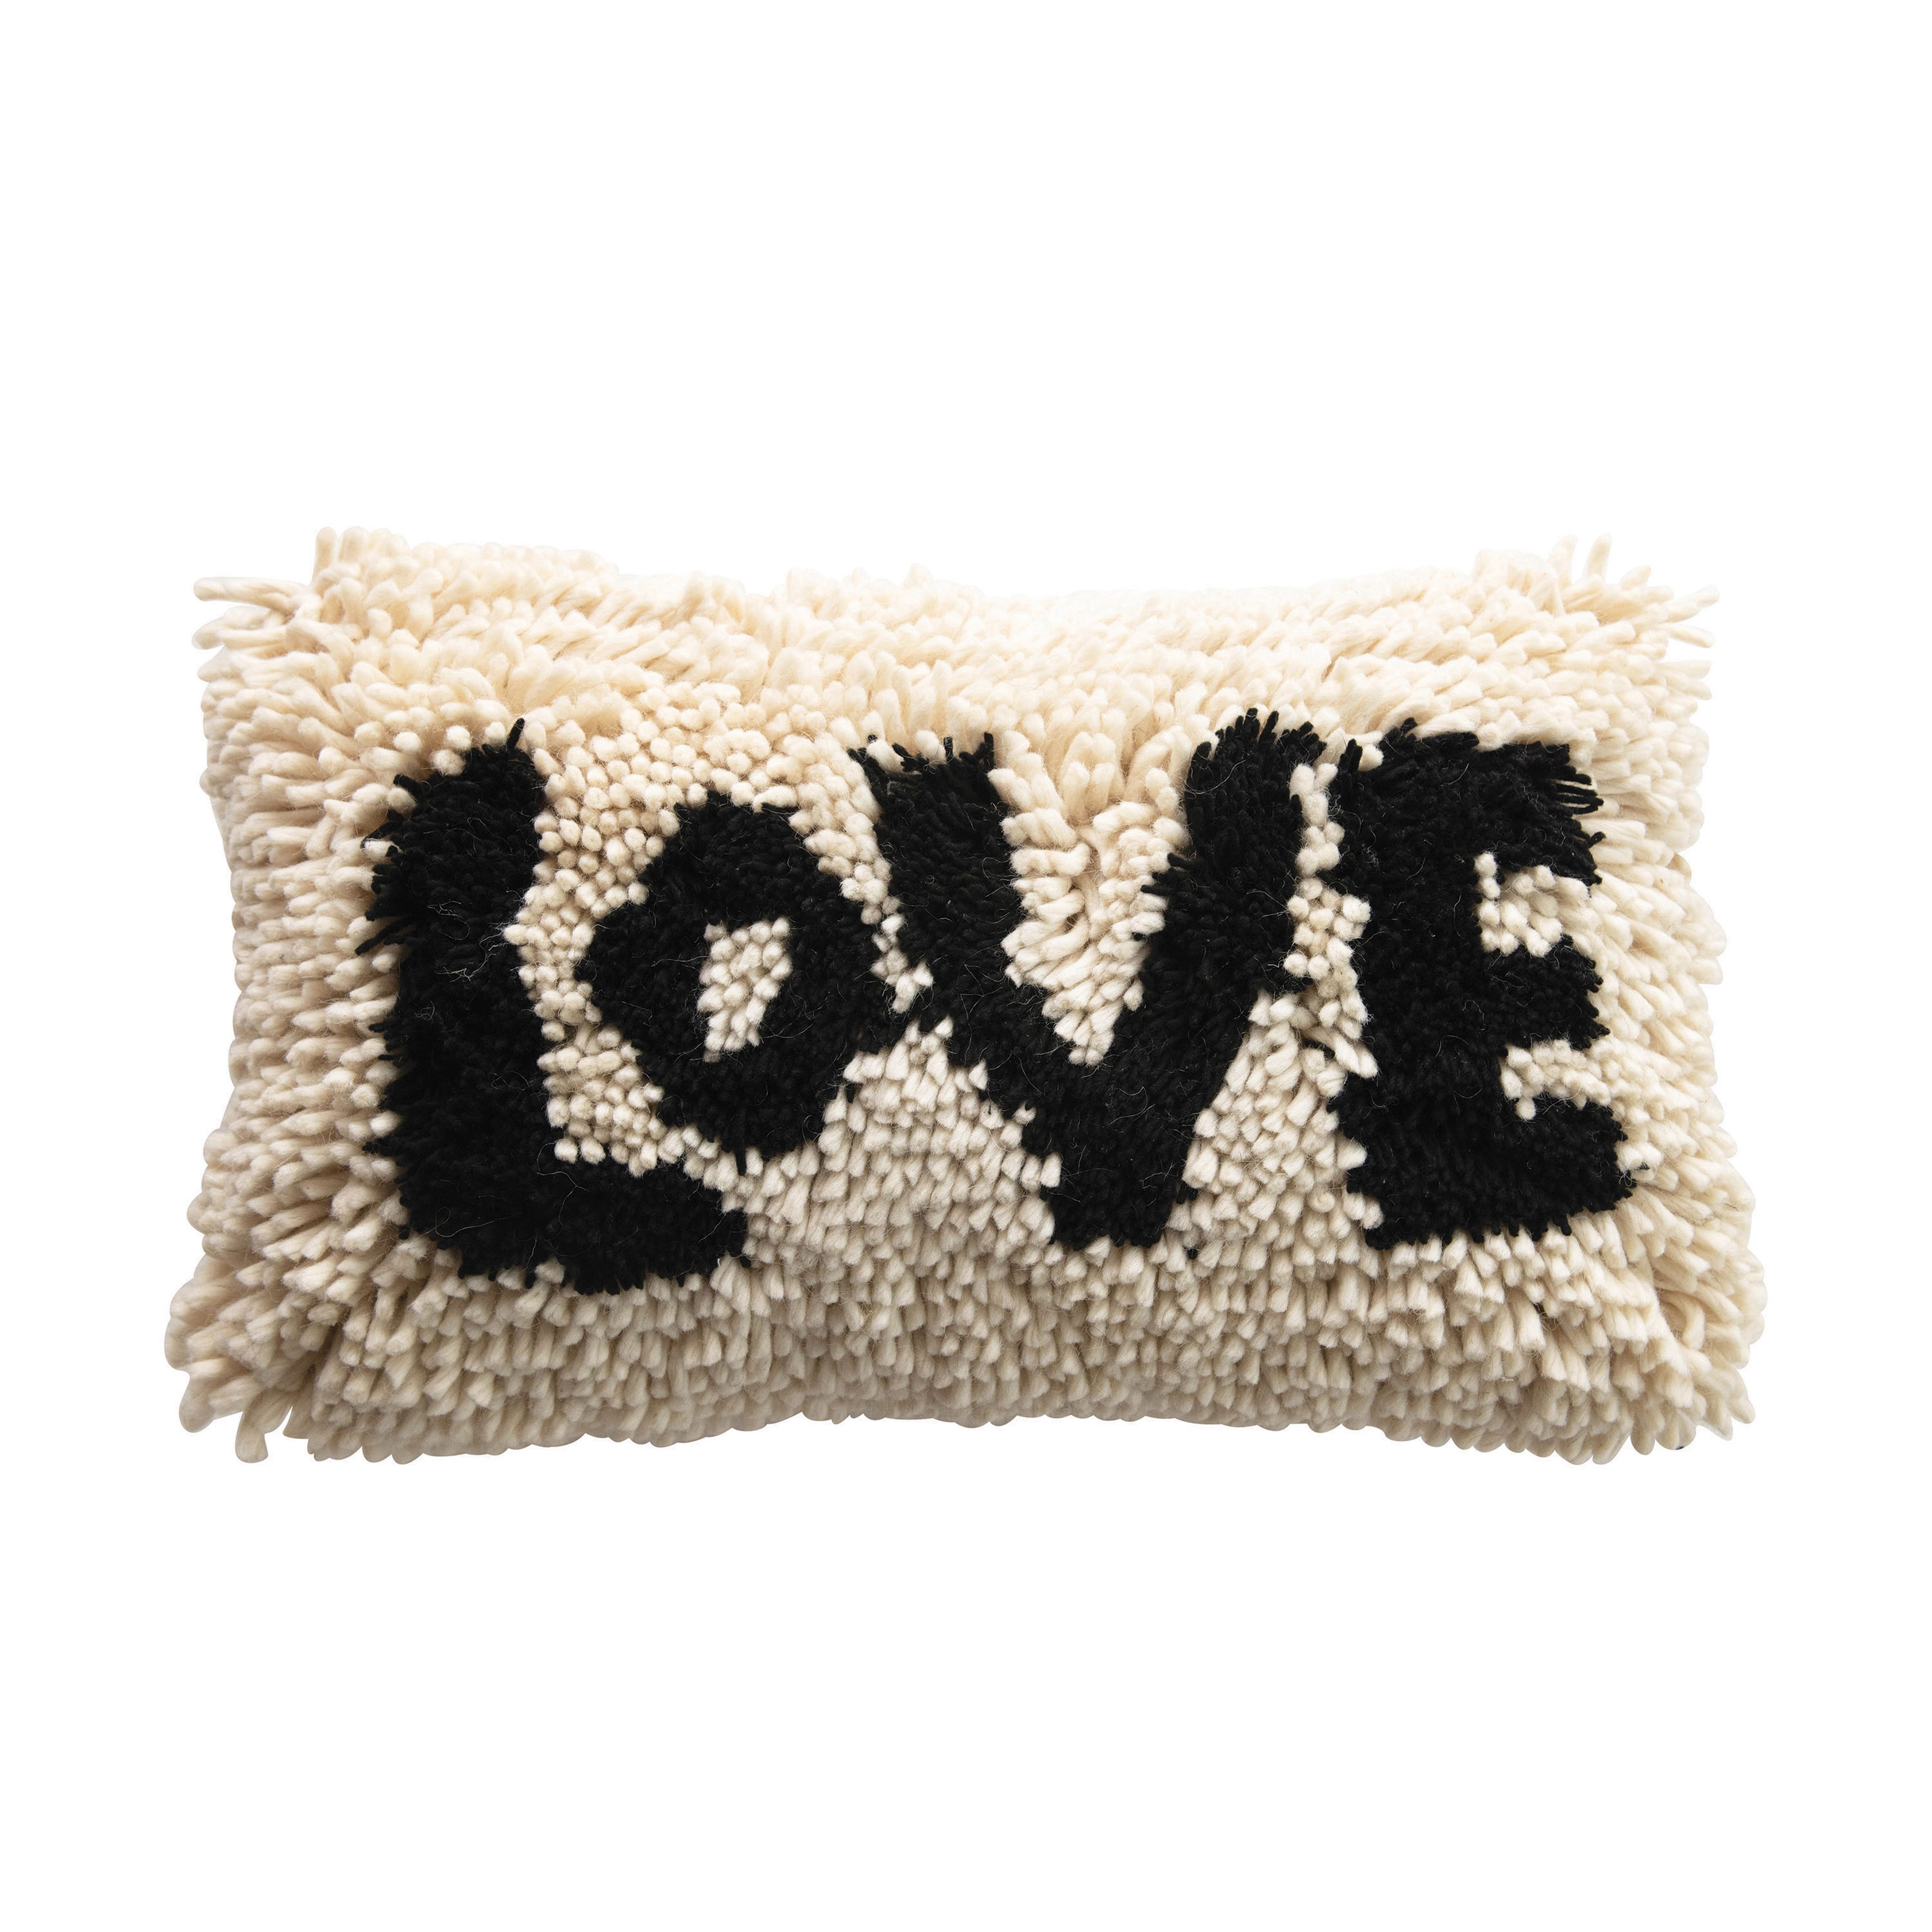 Woven Wool Shag Lumbar Pillow "Love", Black & Cream Color - Image 0